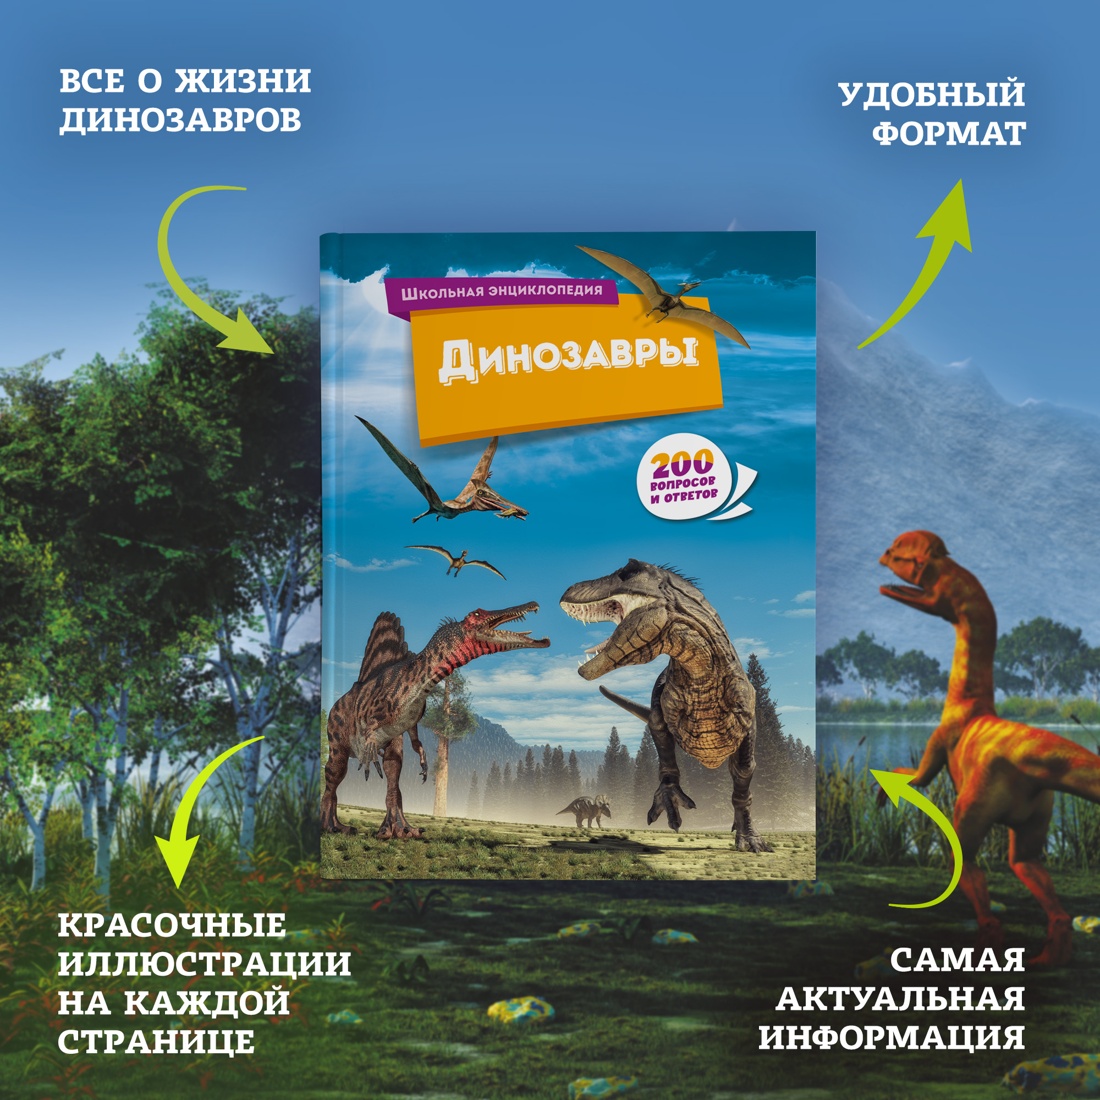 Промо материал к книге "Динозавры" №1